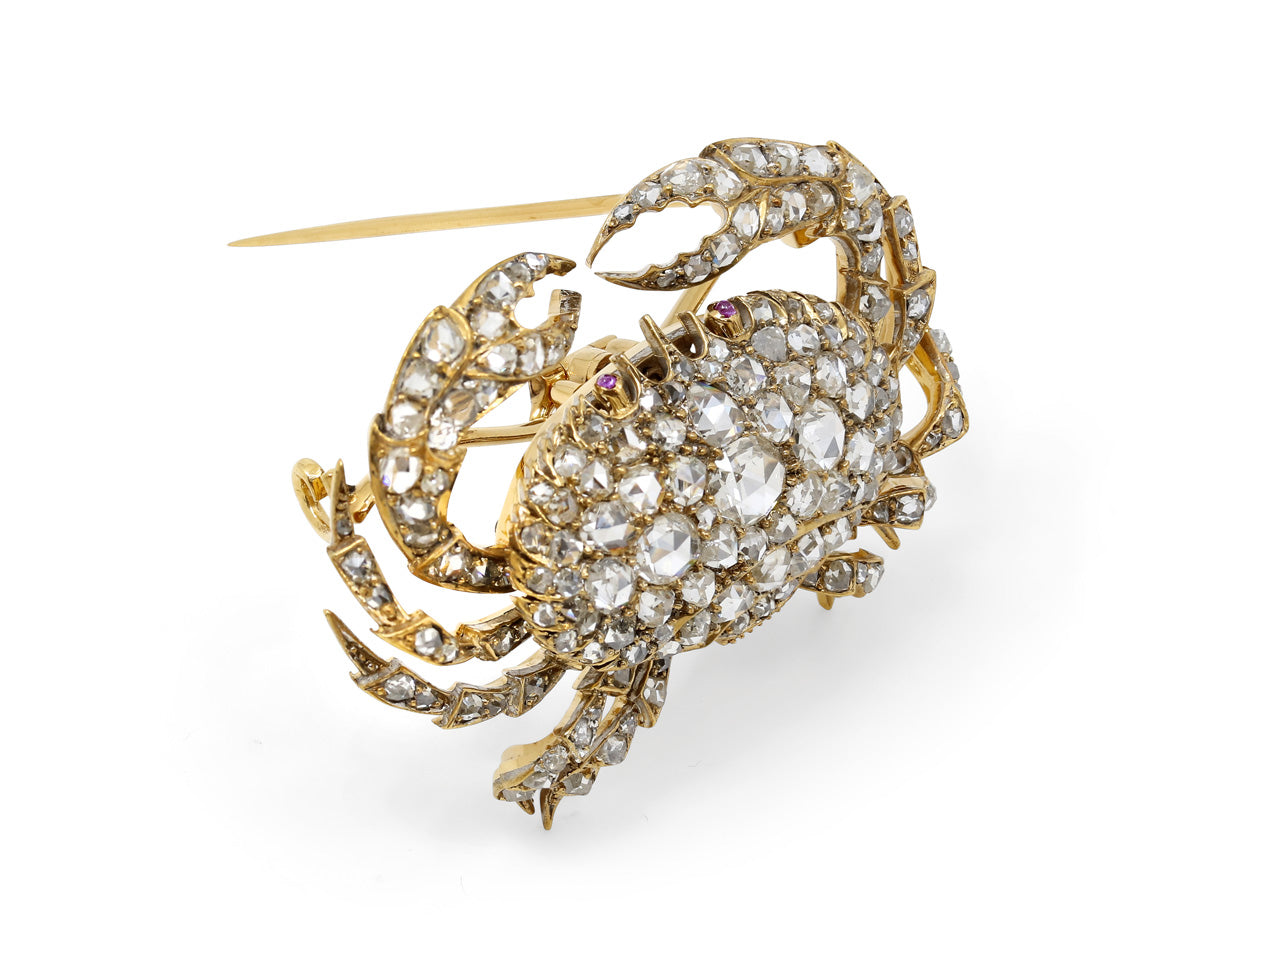 Antique Victorian Diamond Crab Brooch/Pendant in 18K Gold